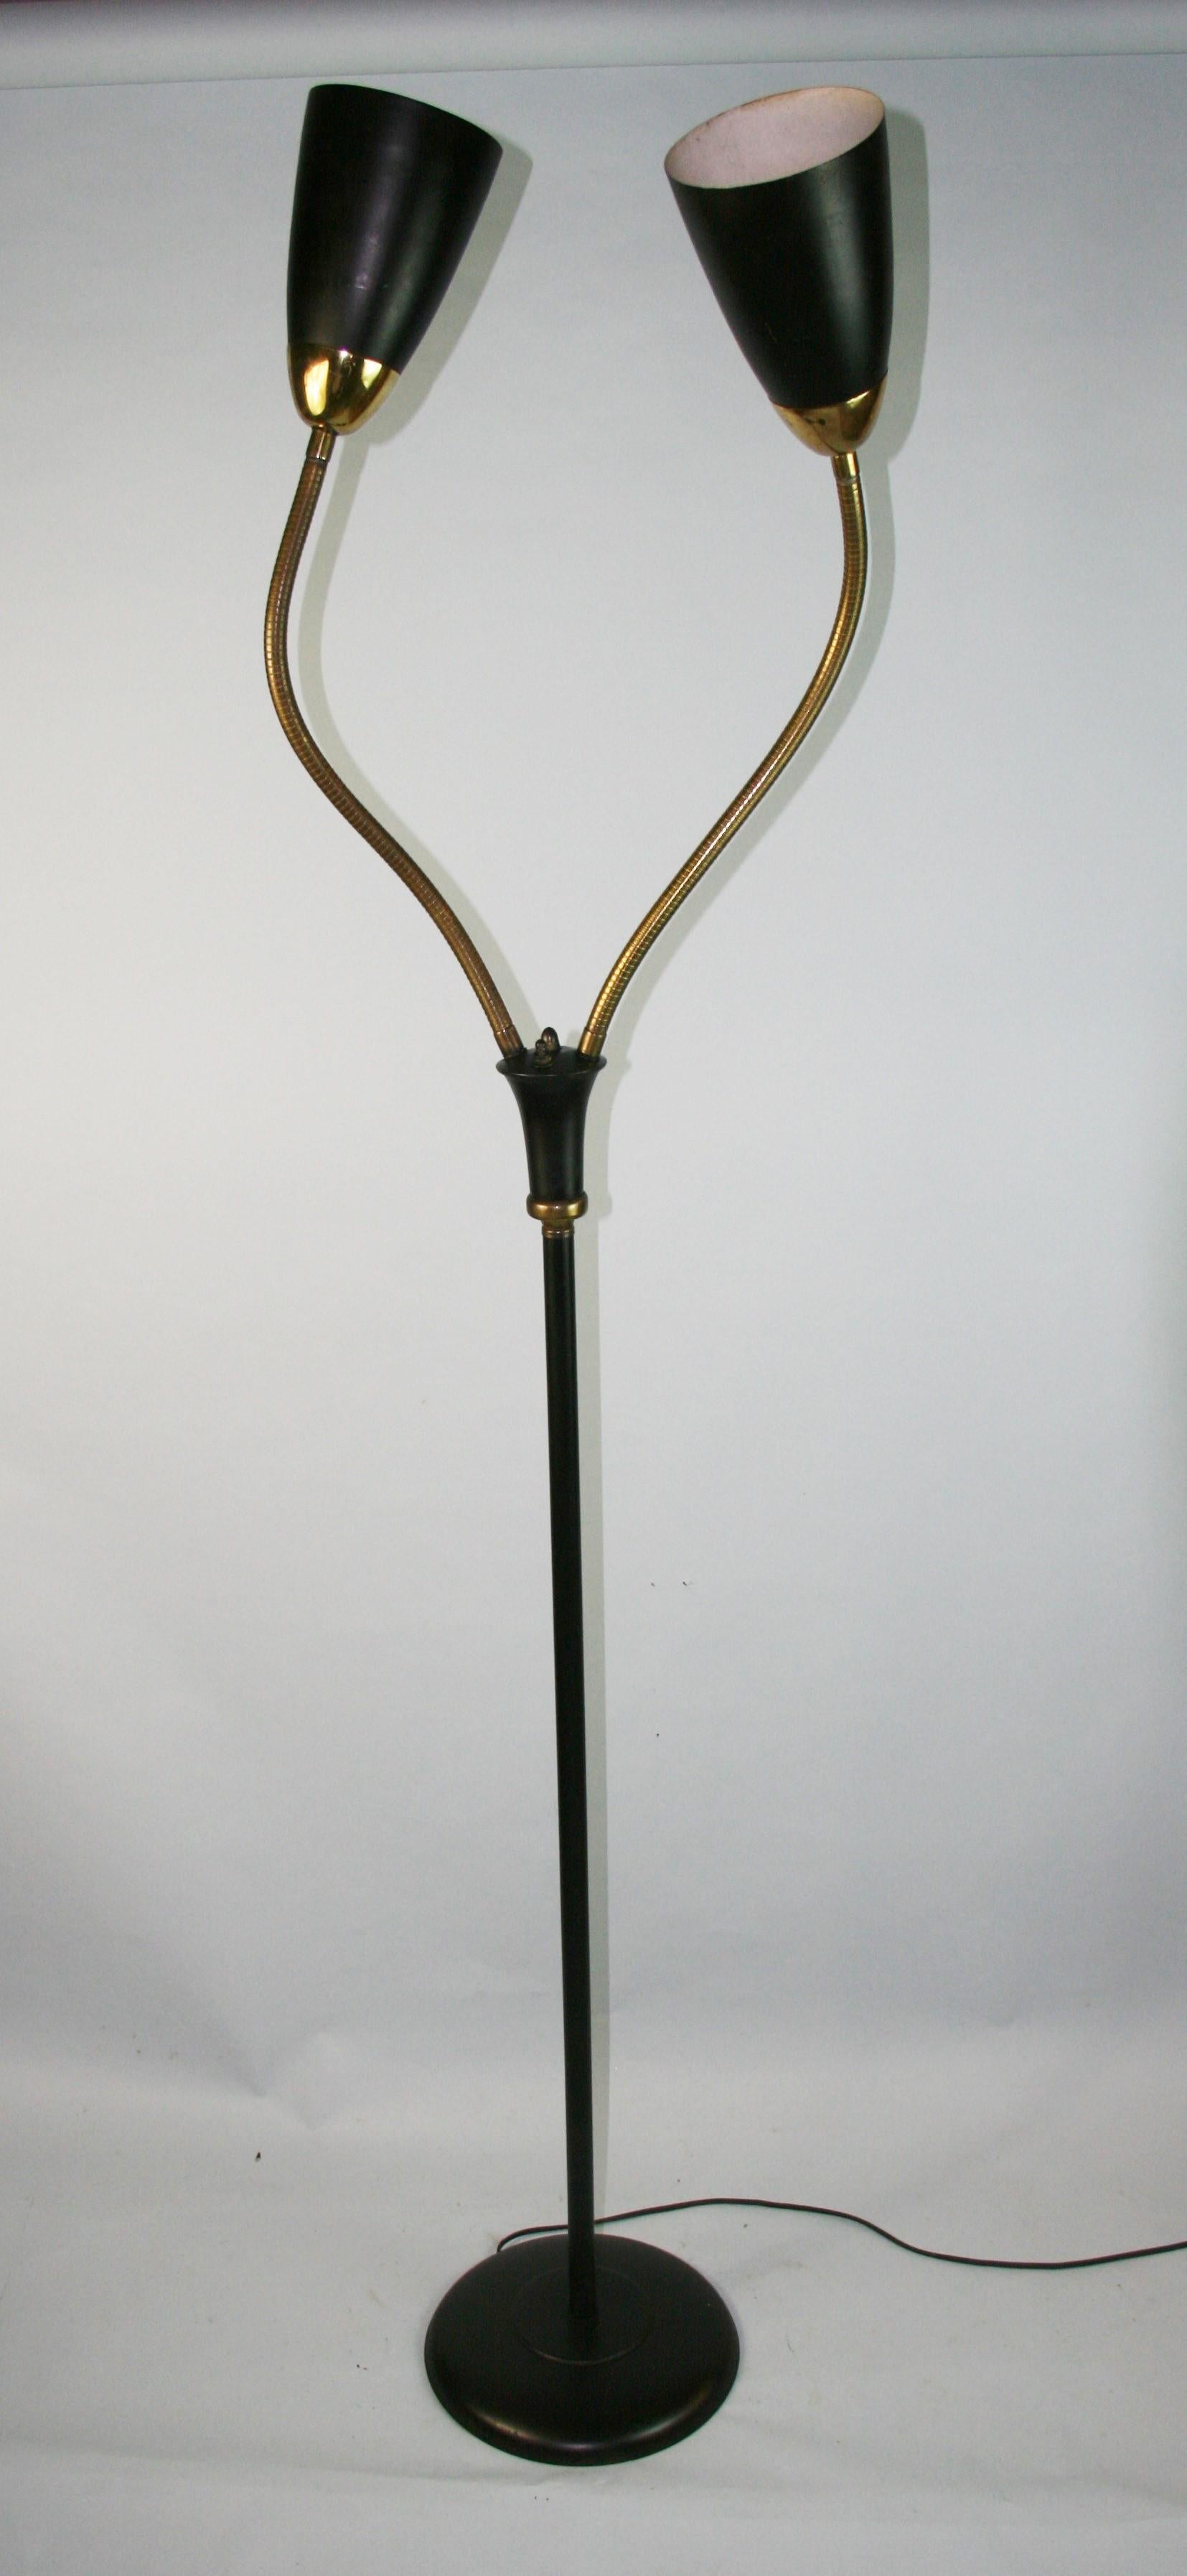 Italian Designer Flexible Arm Brass and Metal Floor Lamp 1950's For Sale 3